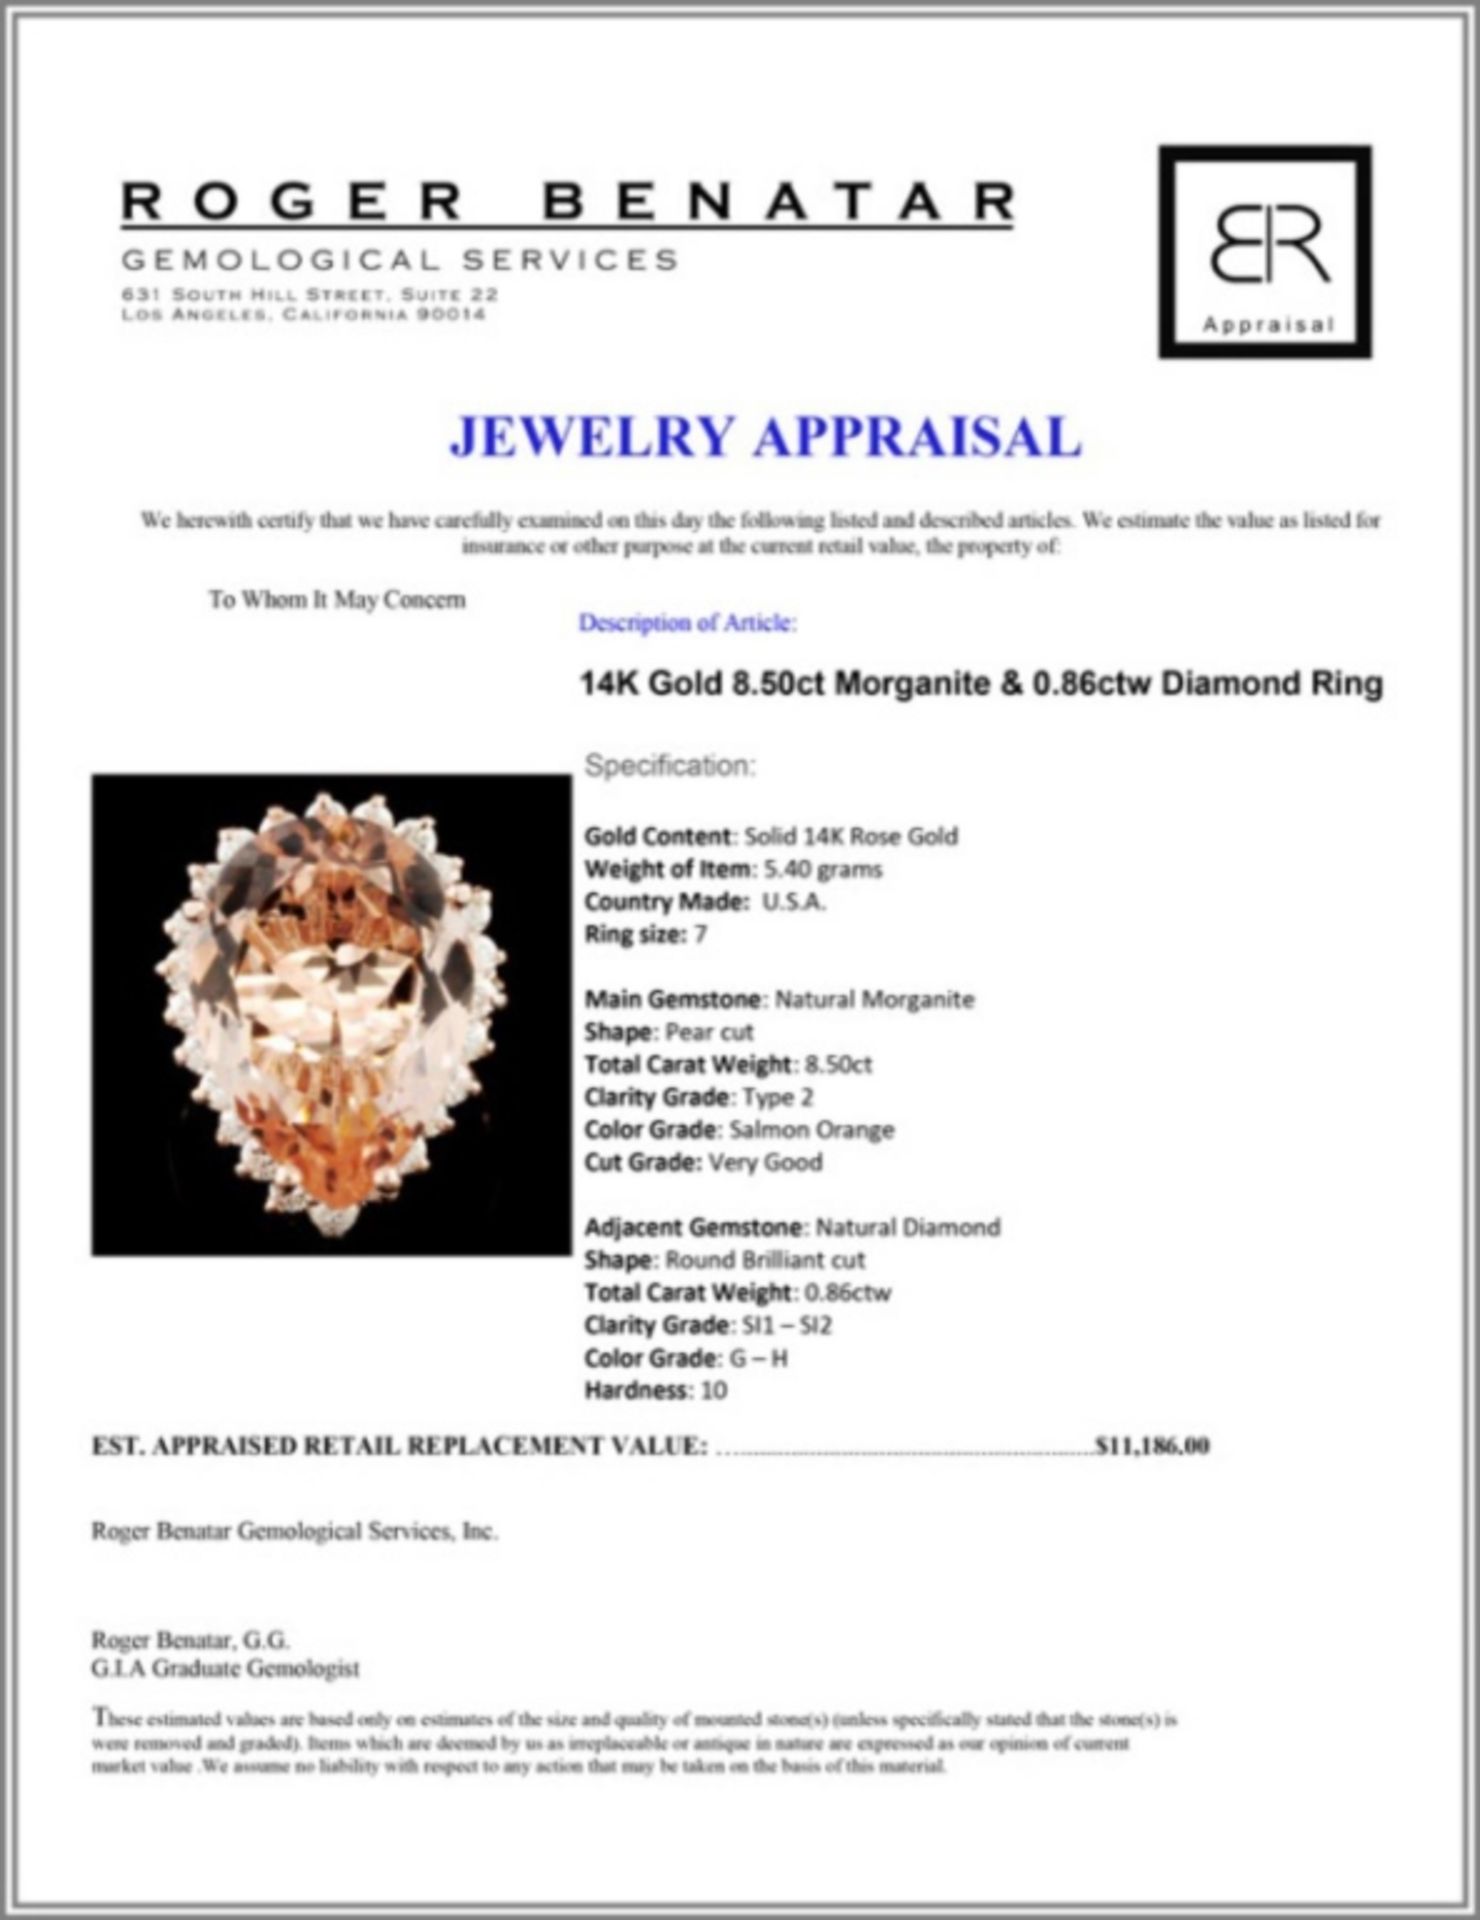 14K Gold 8.50ct Morganite & 0.86ctw Diamond Ring - Image 4 of 4